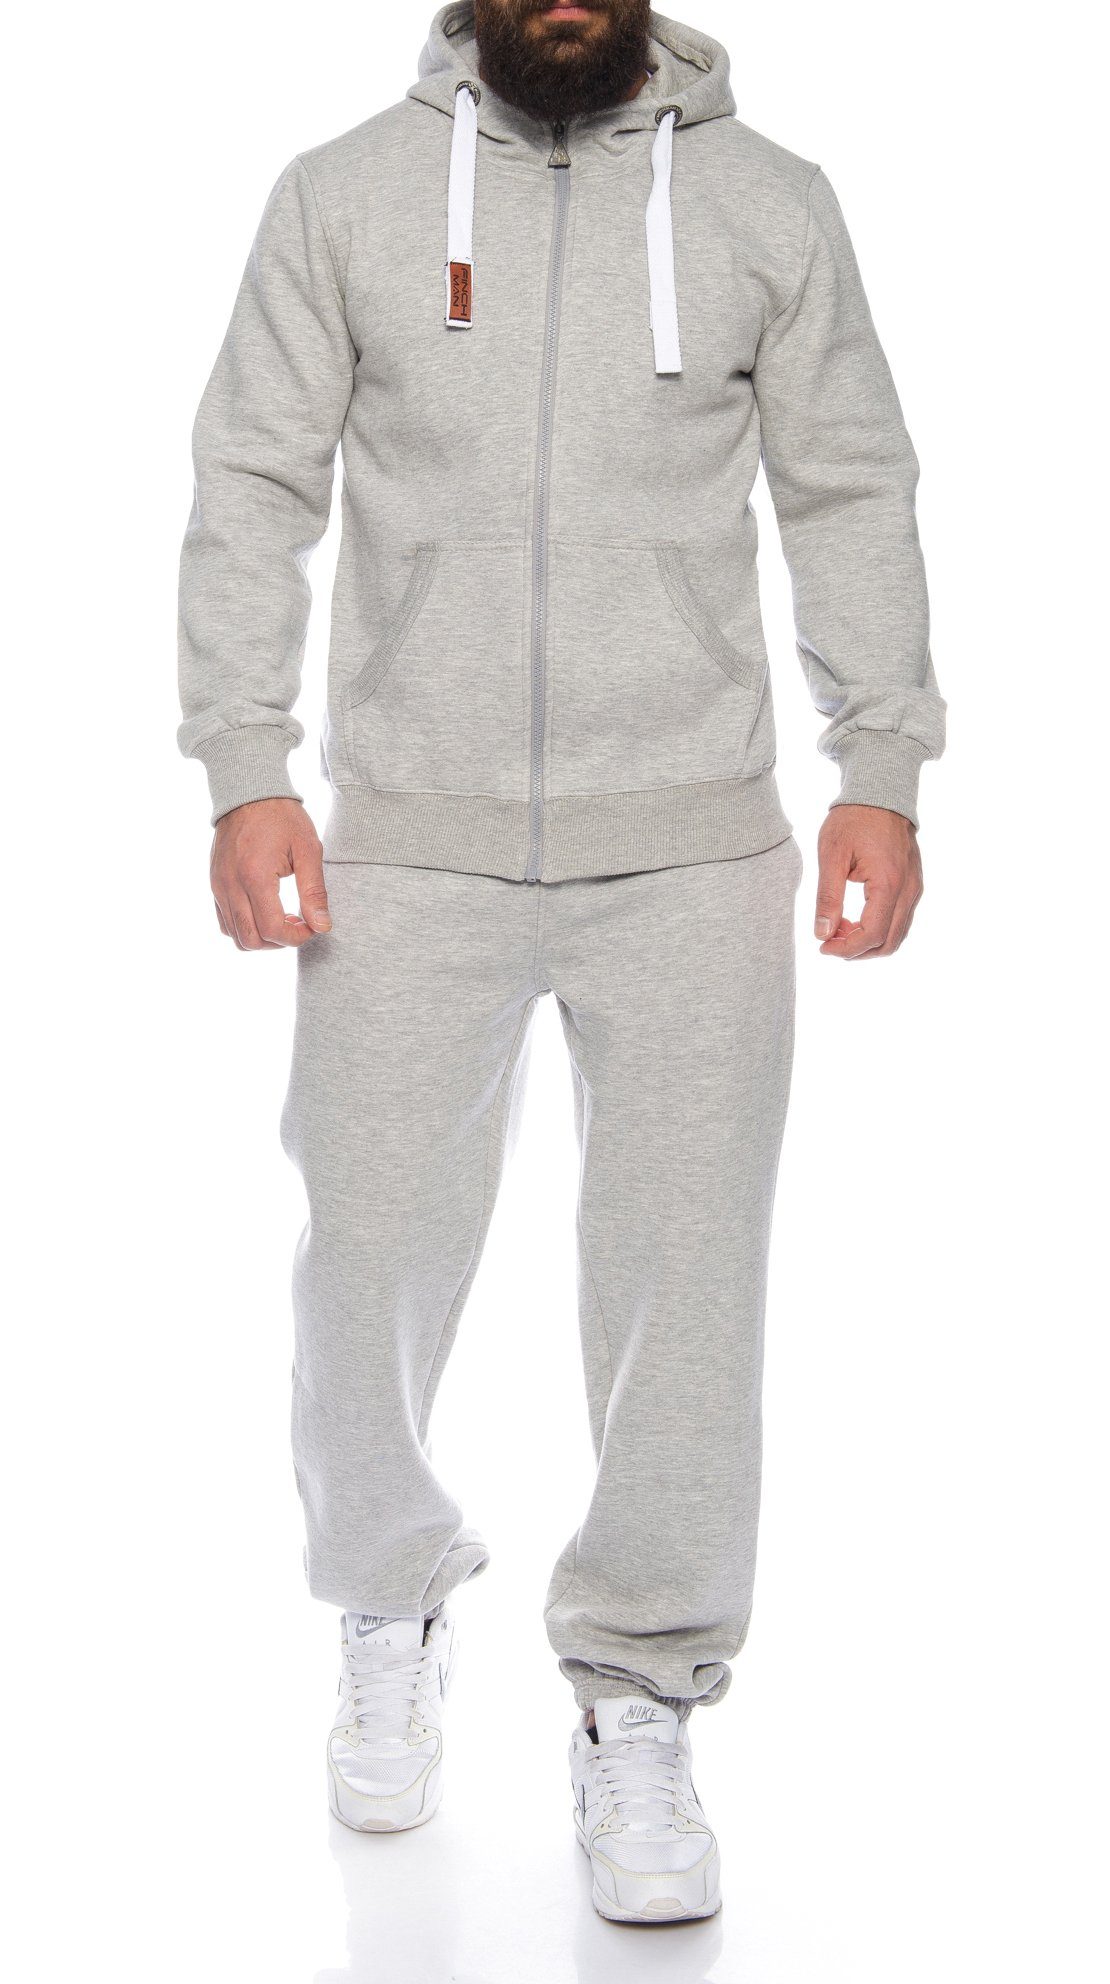 Finchman Jogginganzug »Finchman Finchsuit 1 Herren Jogging Anzug  Trainingsanzug Baumwolle« online kaufen | OTTO